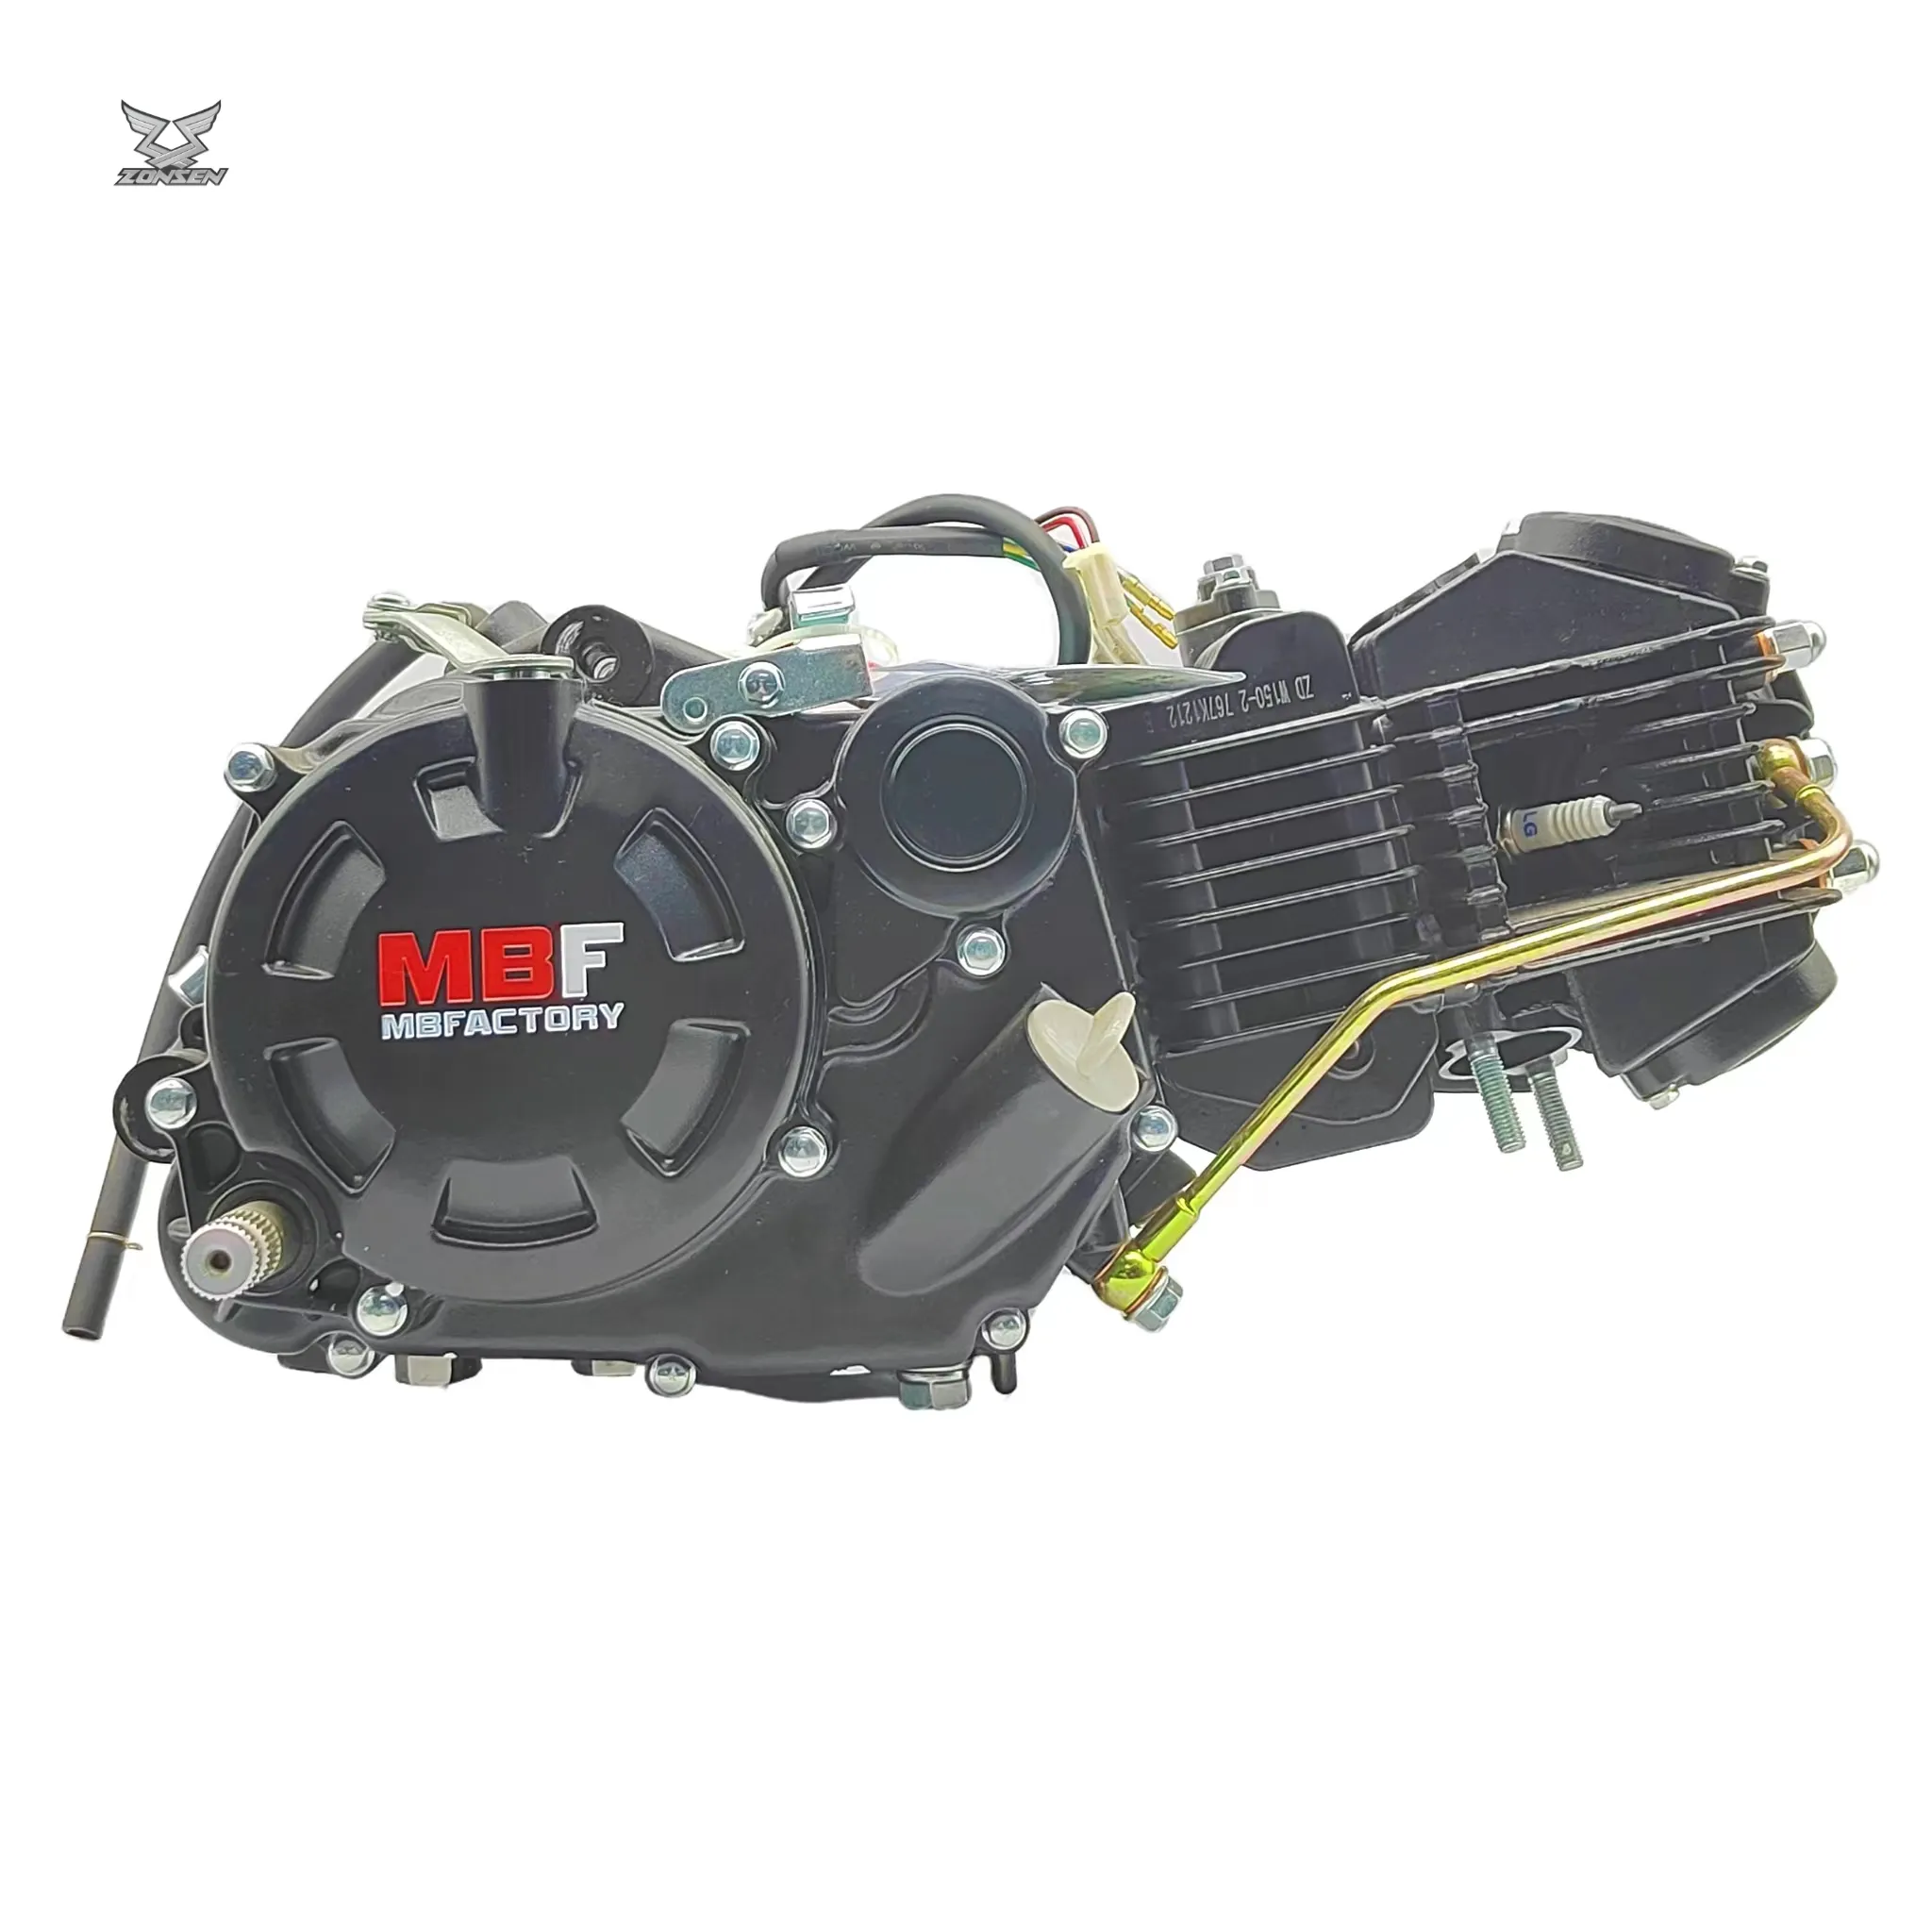 W150 Zongshen Repuestos डे Motos 150cc पूरा मोटरसाइकिल इंजन 4-स्ट्रोक तेल-ठंडा ऑफ सड़क मोटरसाइकिल इंजन विधानसभा 150cc